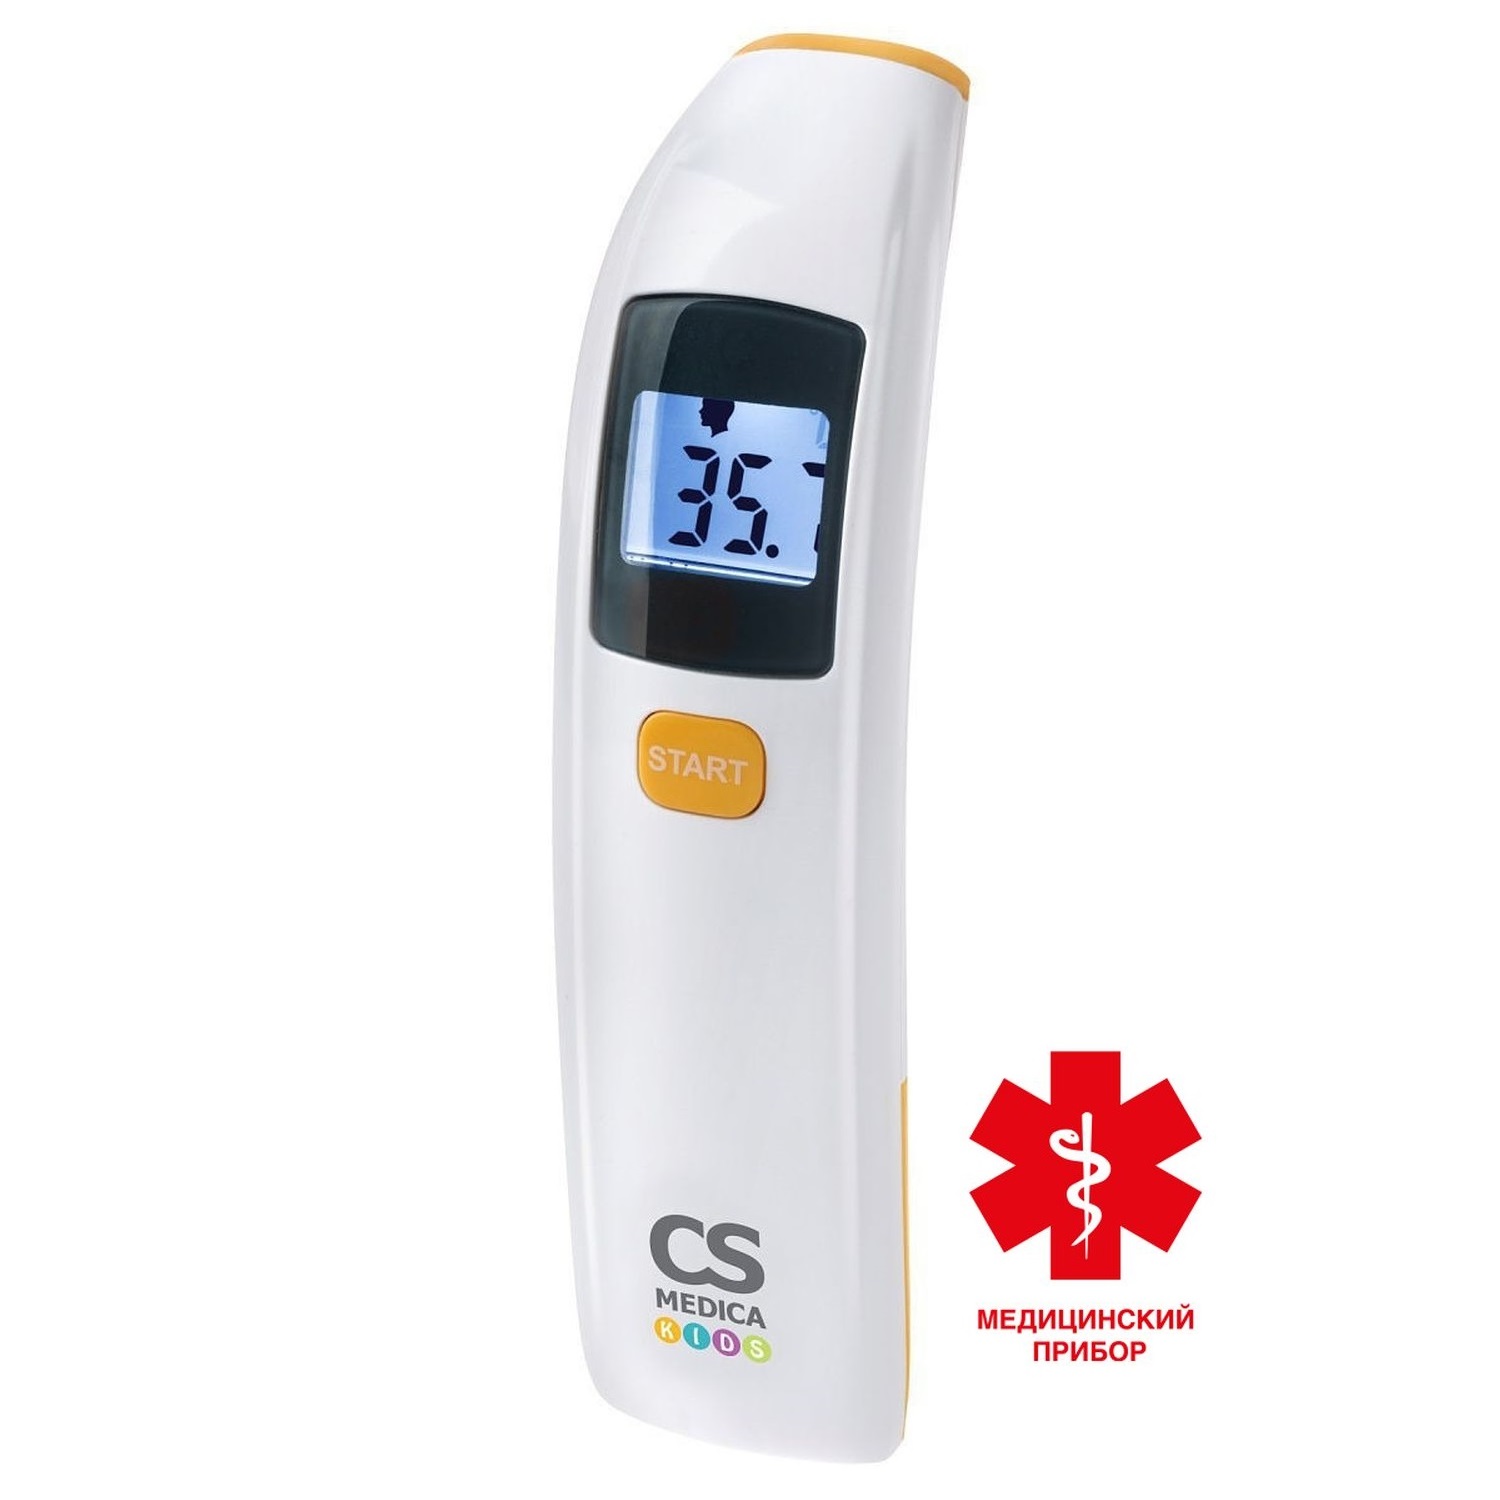 СиЭс Медика термометр электронный медицинский бесконтактный CS-88 термометр электронный медицинский лягушка kids cs 82 f cs medica сиэс медика